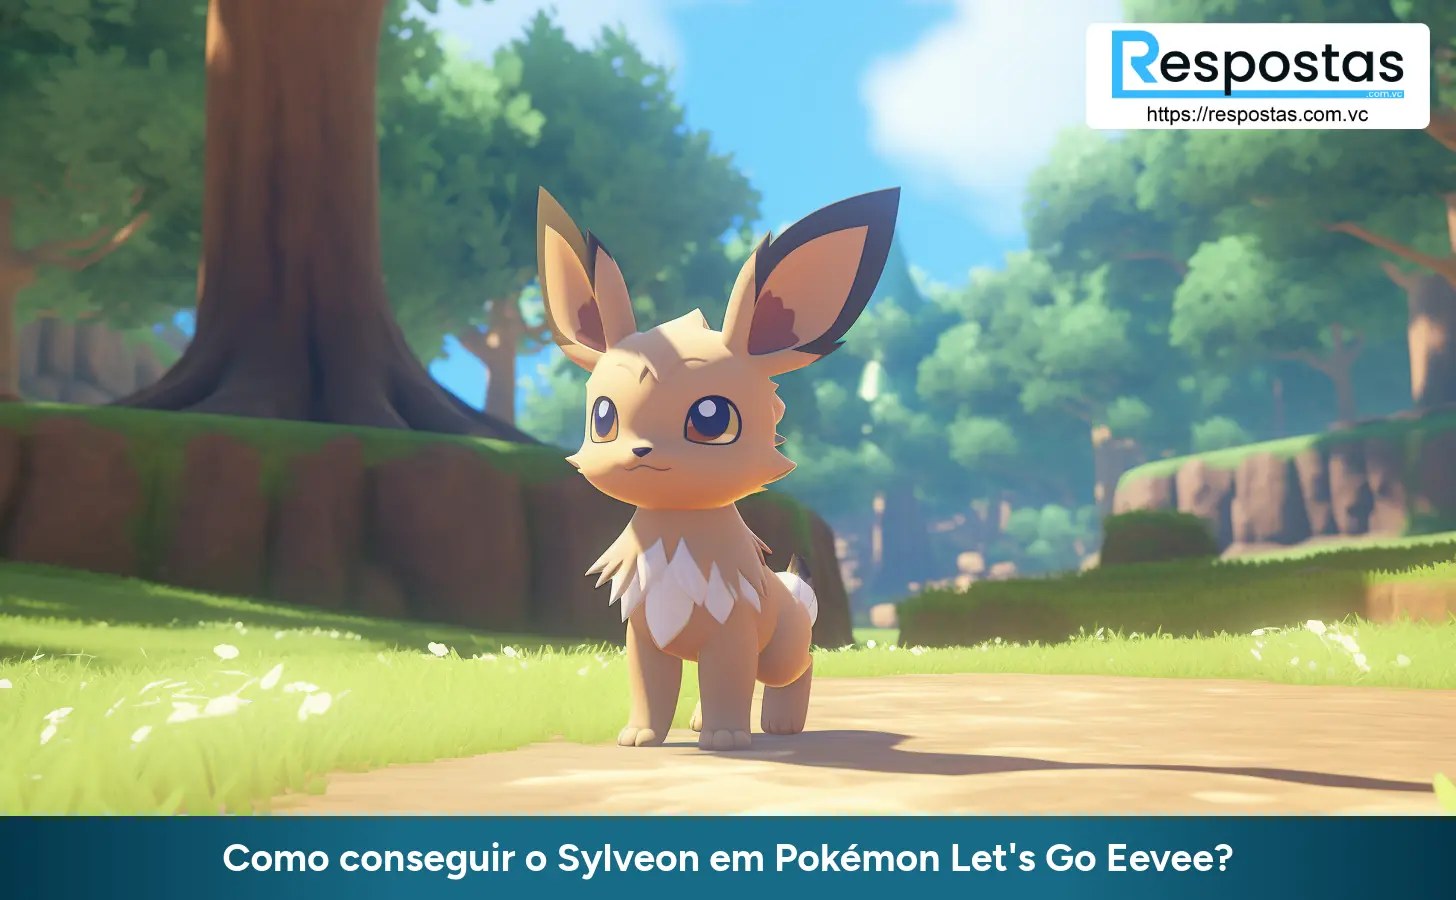 Como conseguir o Sylveon em Pokémon Let's Go Eevee?